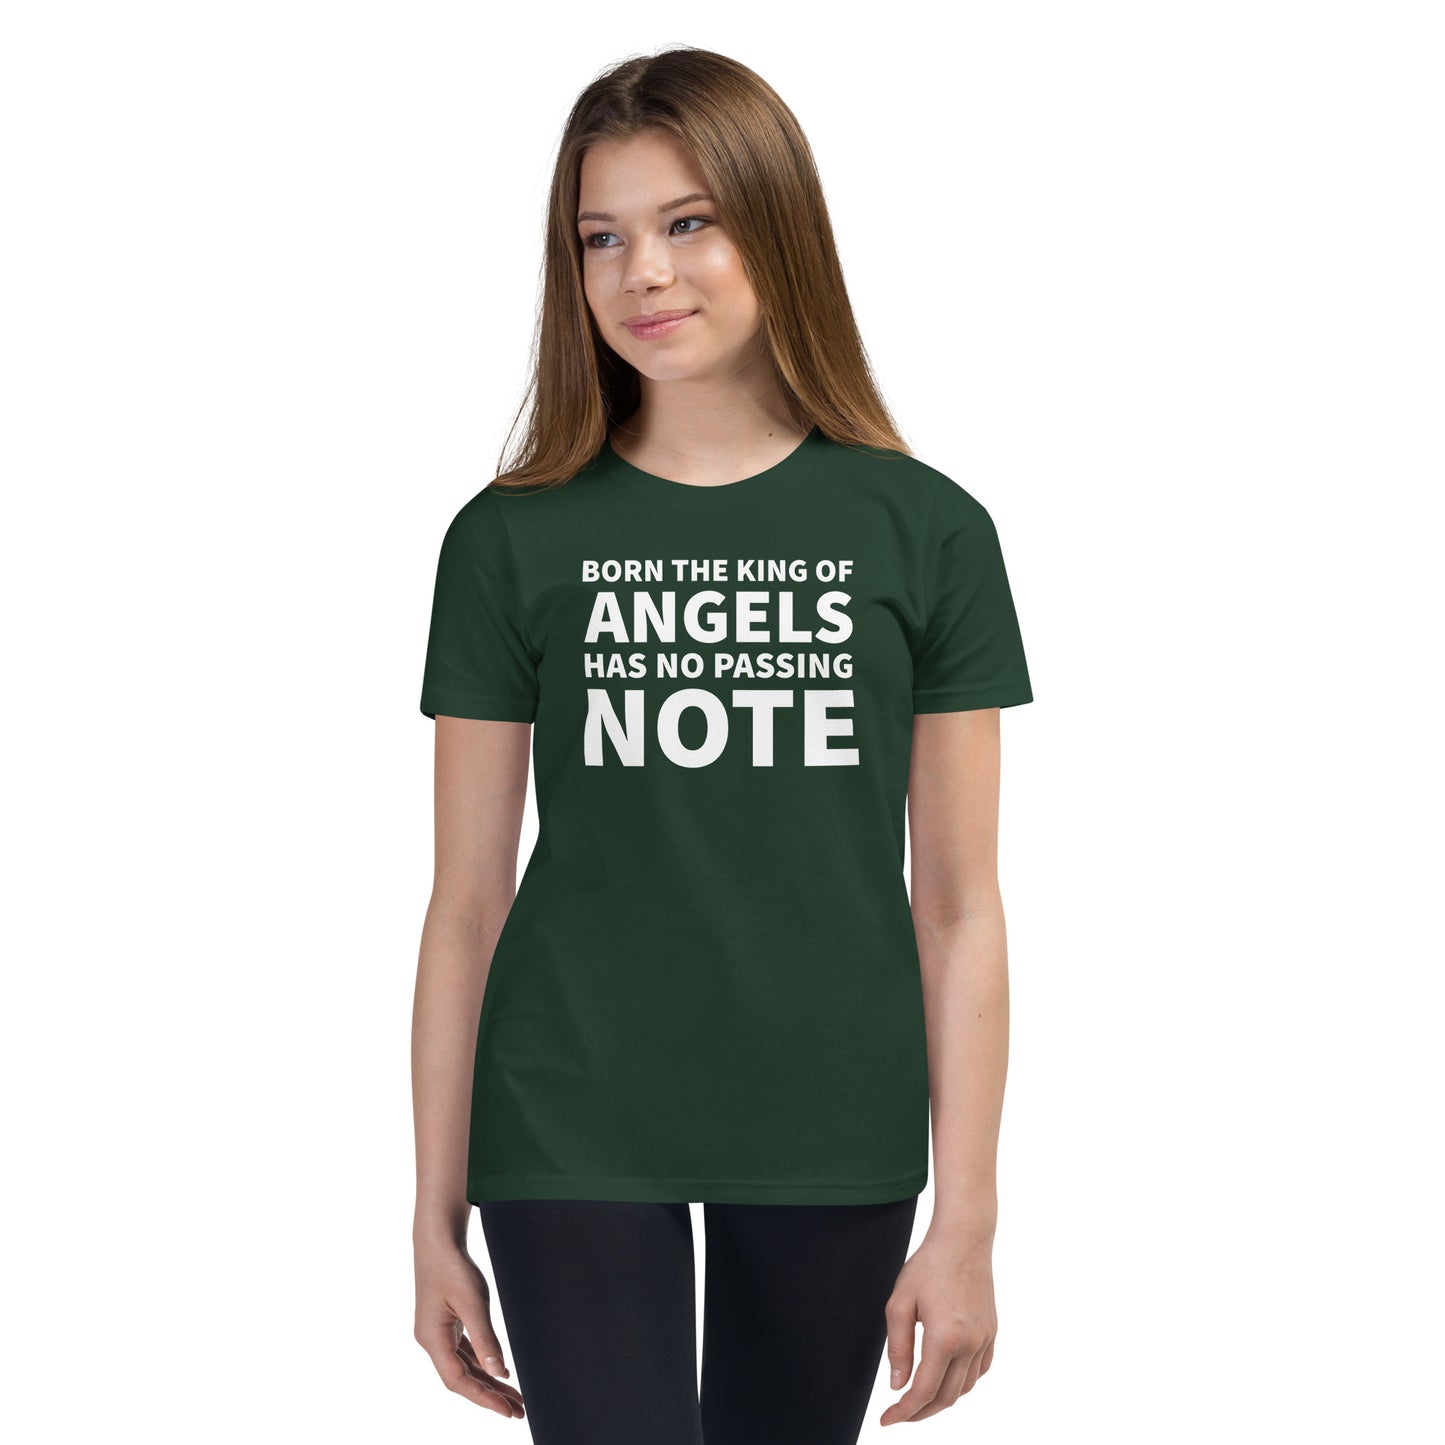 Passing Note - Kids T-Shirt